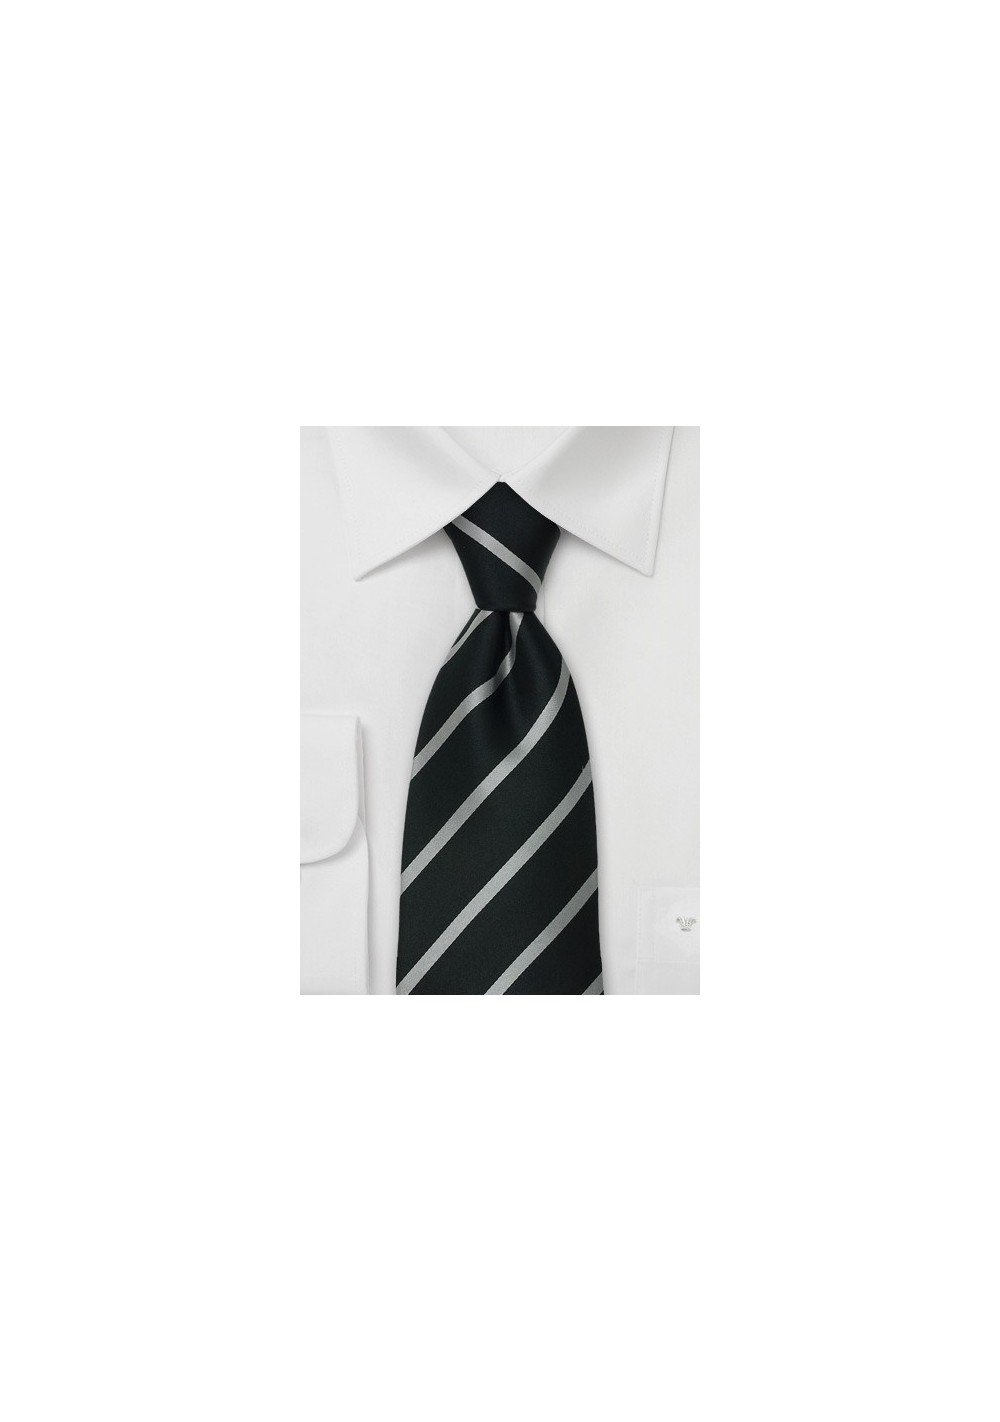 Formal Black Ties - Black & Silver Striped Tie